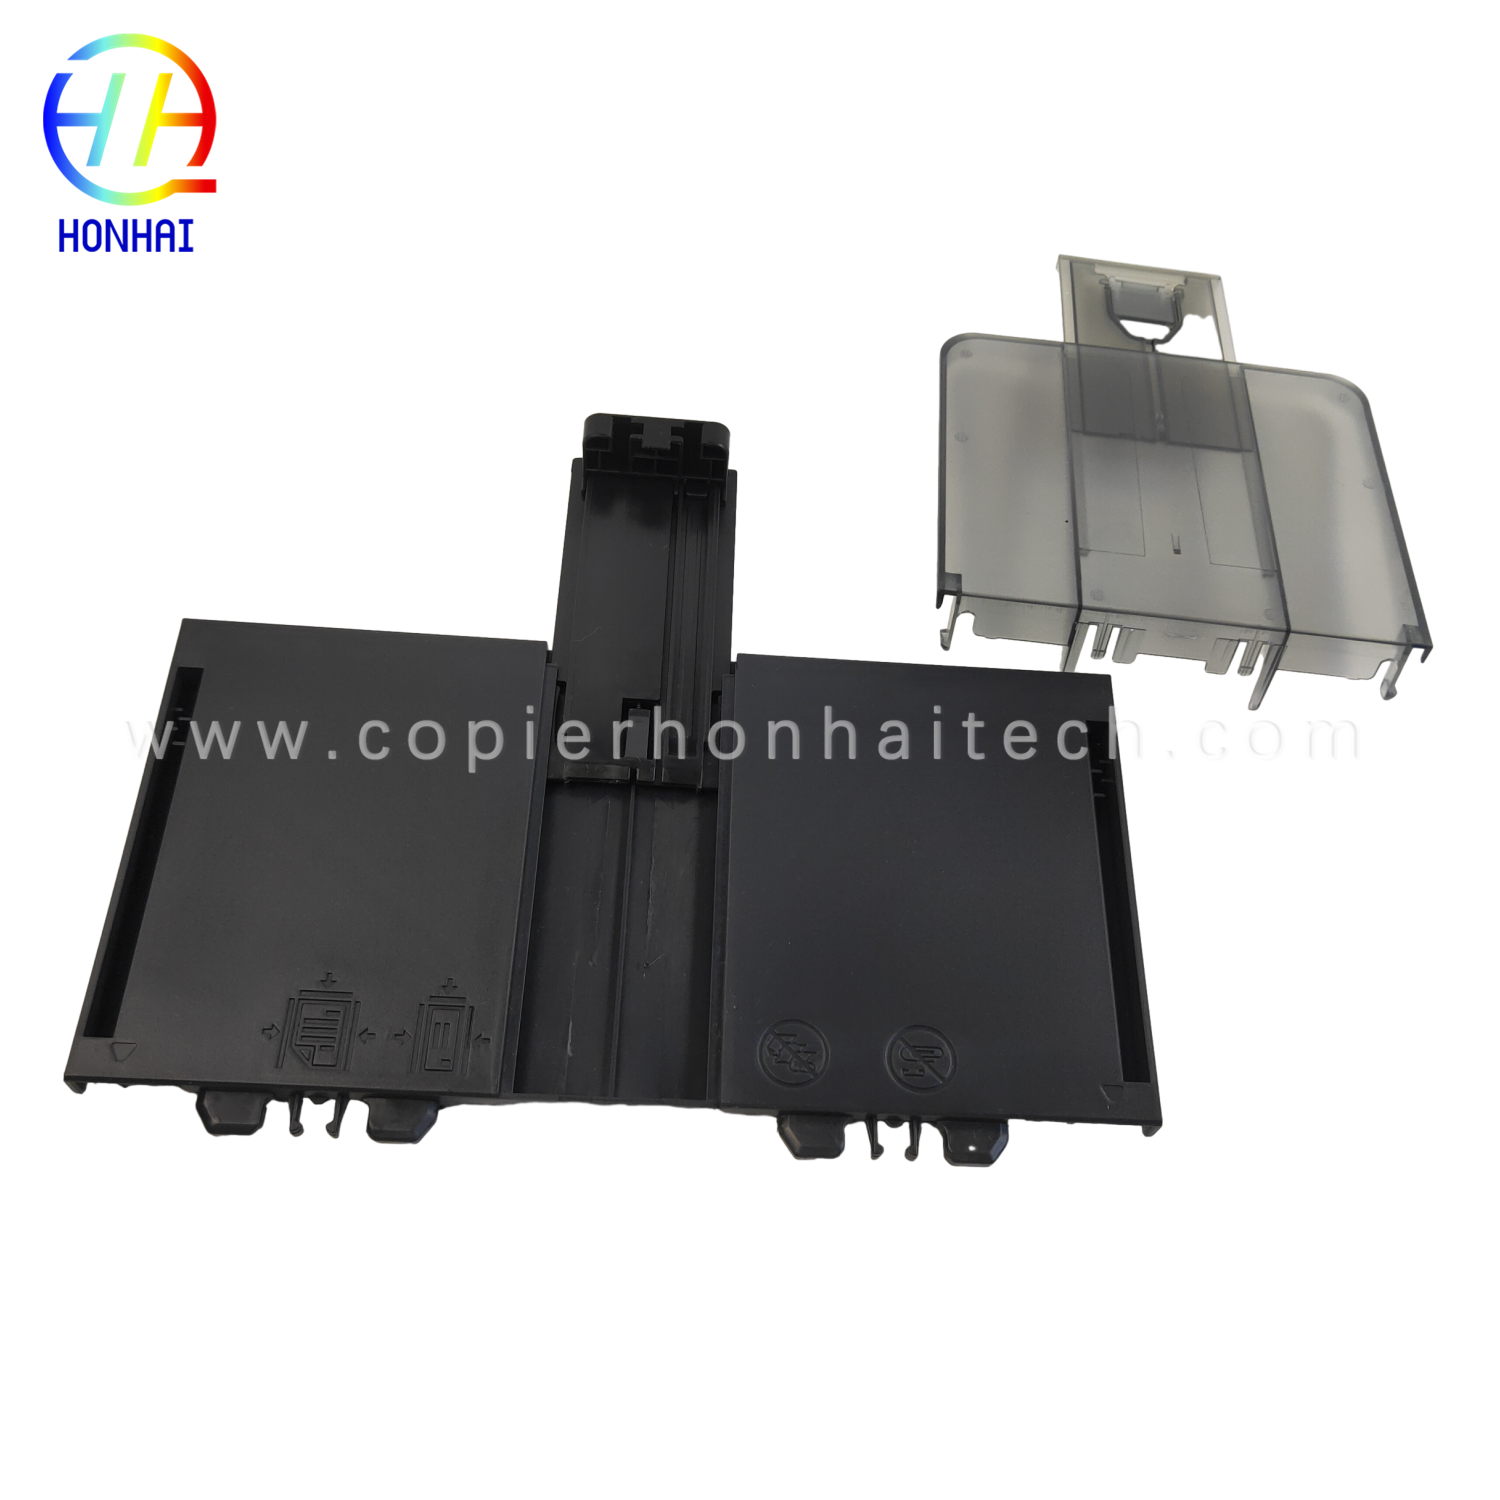 https://www.copierhonhaitech.com/regiving-tray-and-paper-tray-set-for-hp-laserjet-pro-mfp-225dn-product/